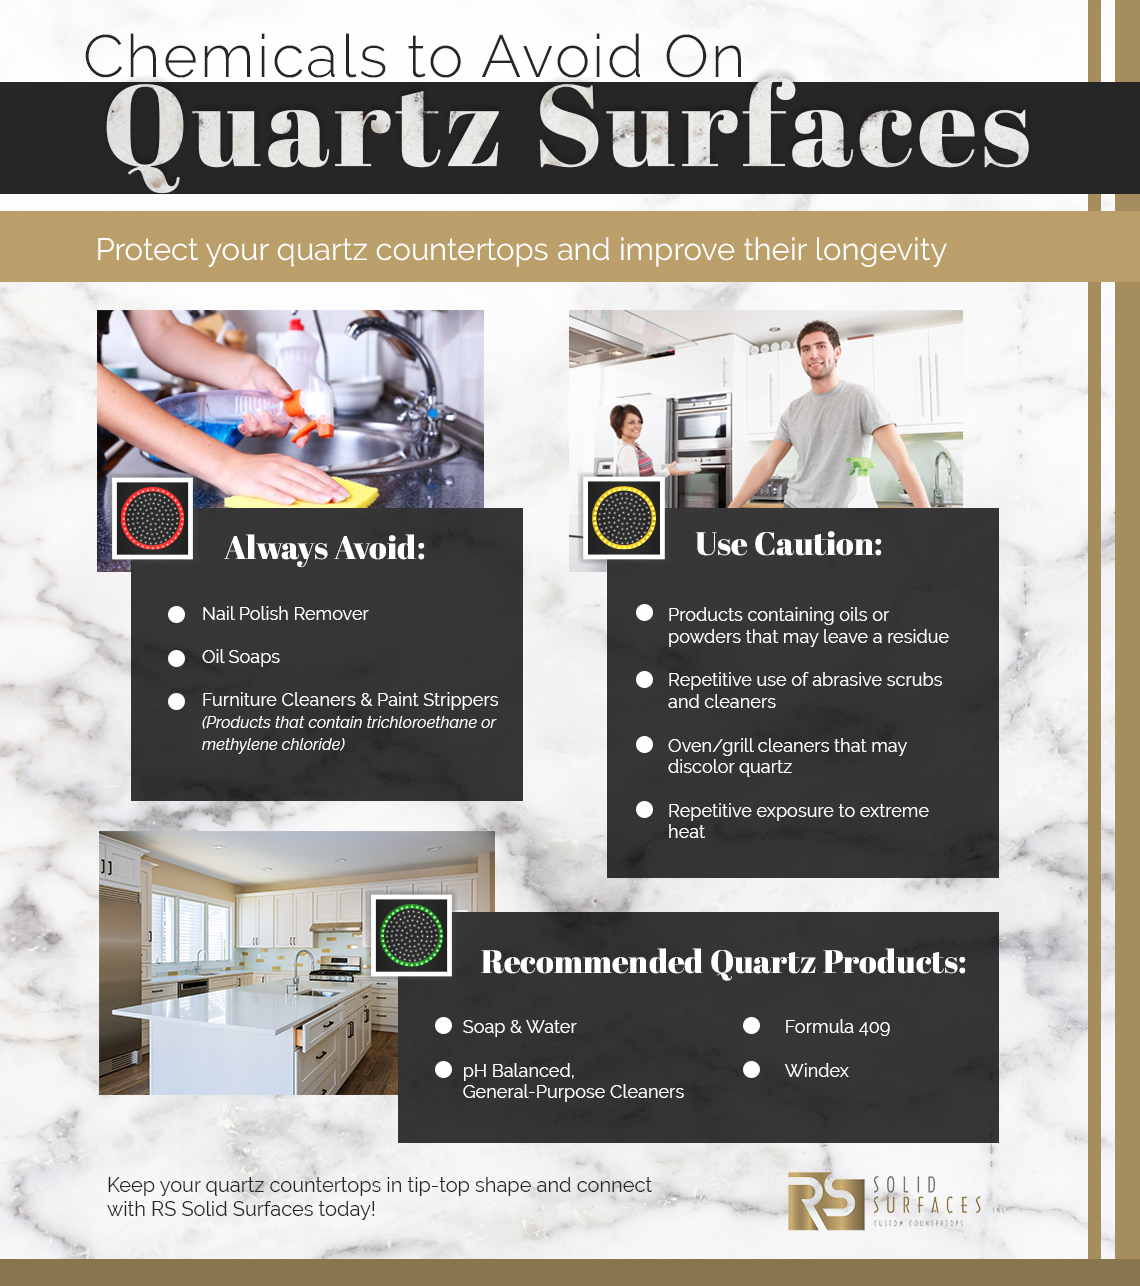 Quartz Care Tending To Your, Is 409 Safe For Quartz Countertops